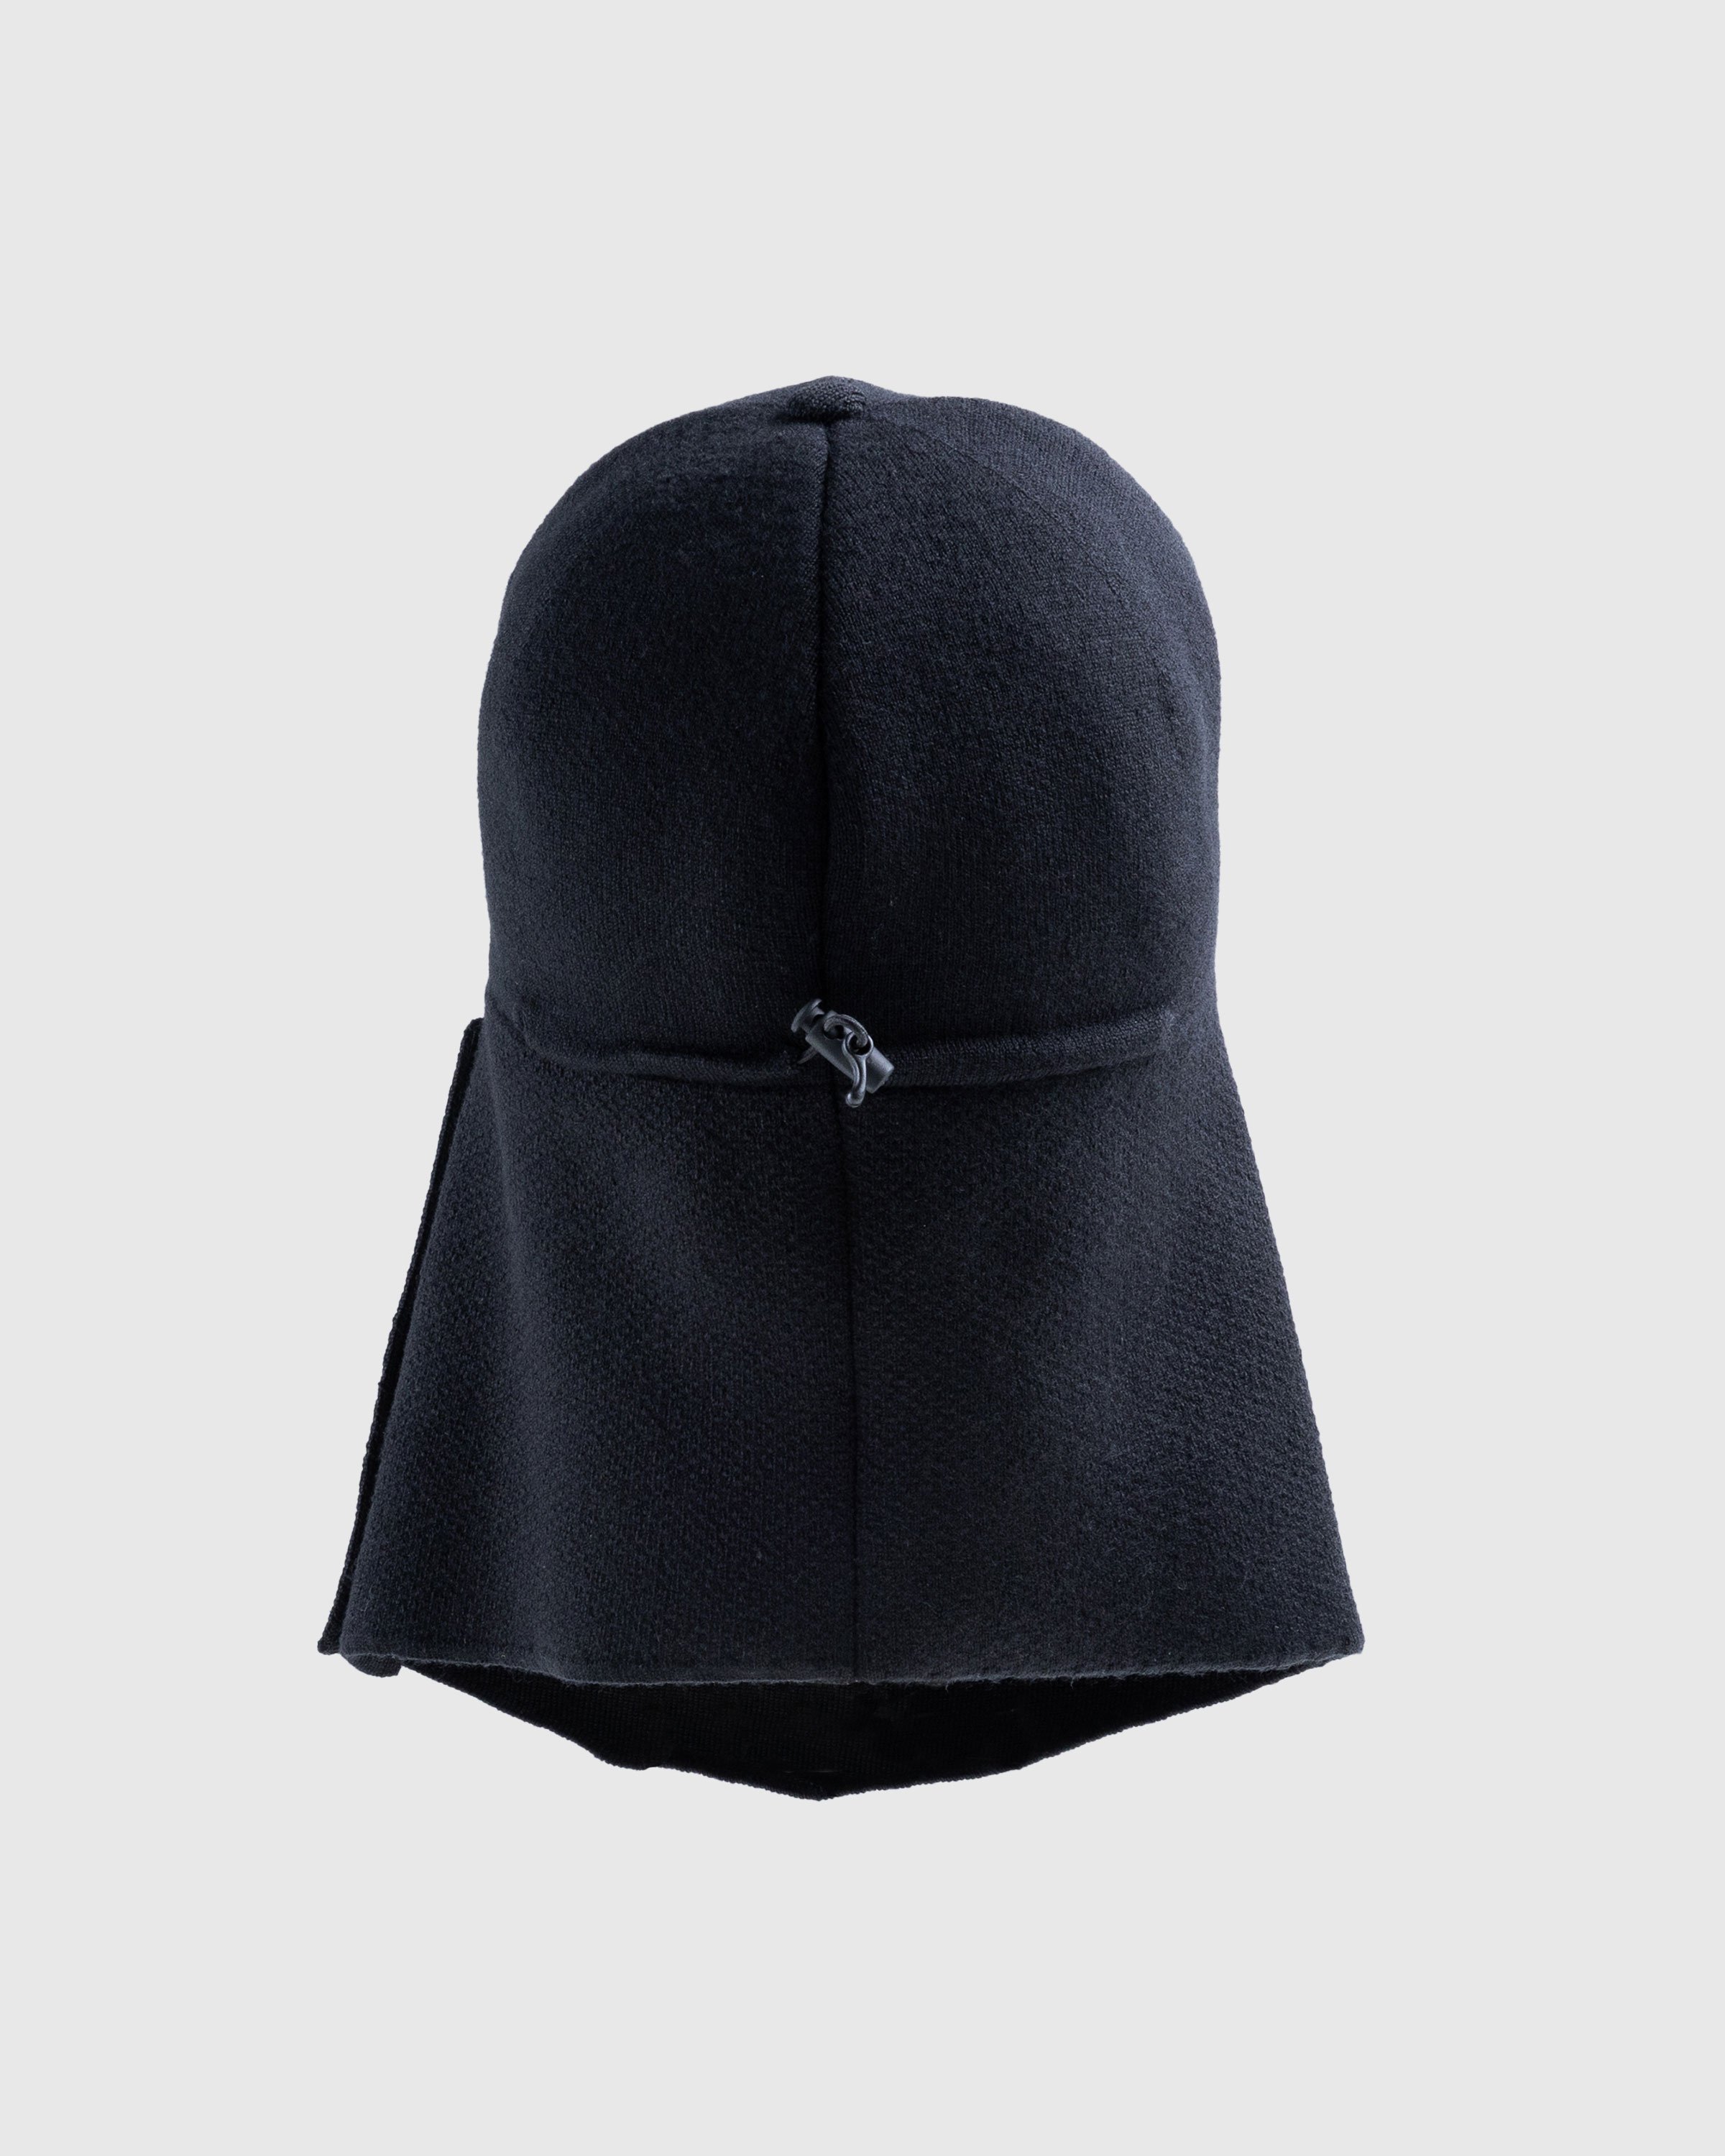 Reebok - Knit Mask Hat Black - Accessories - Black - Image 3